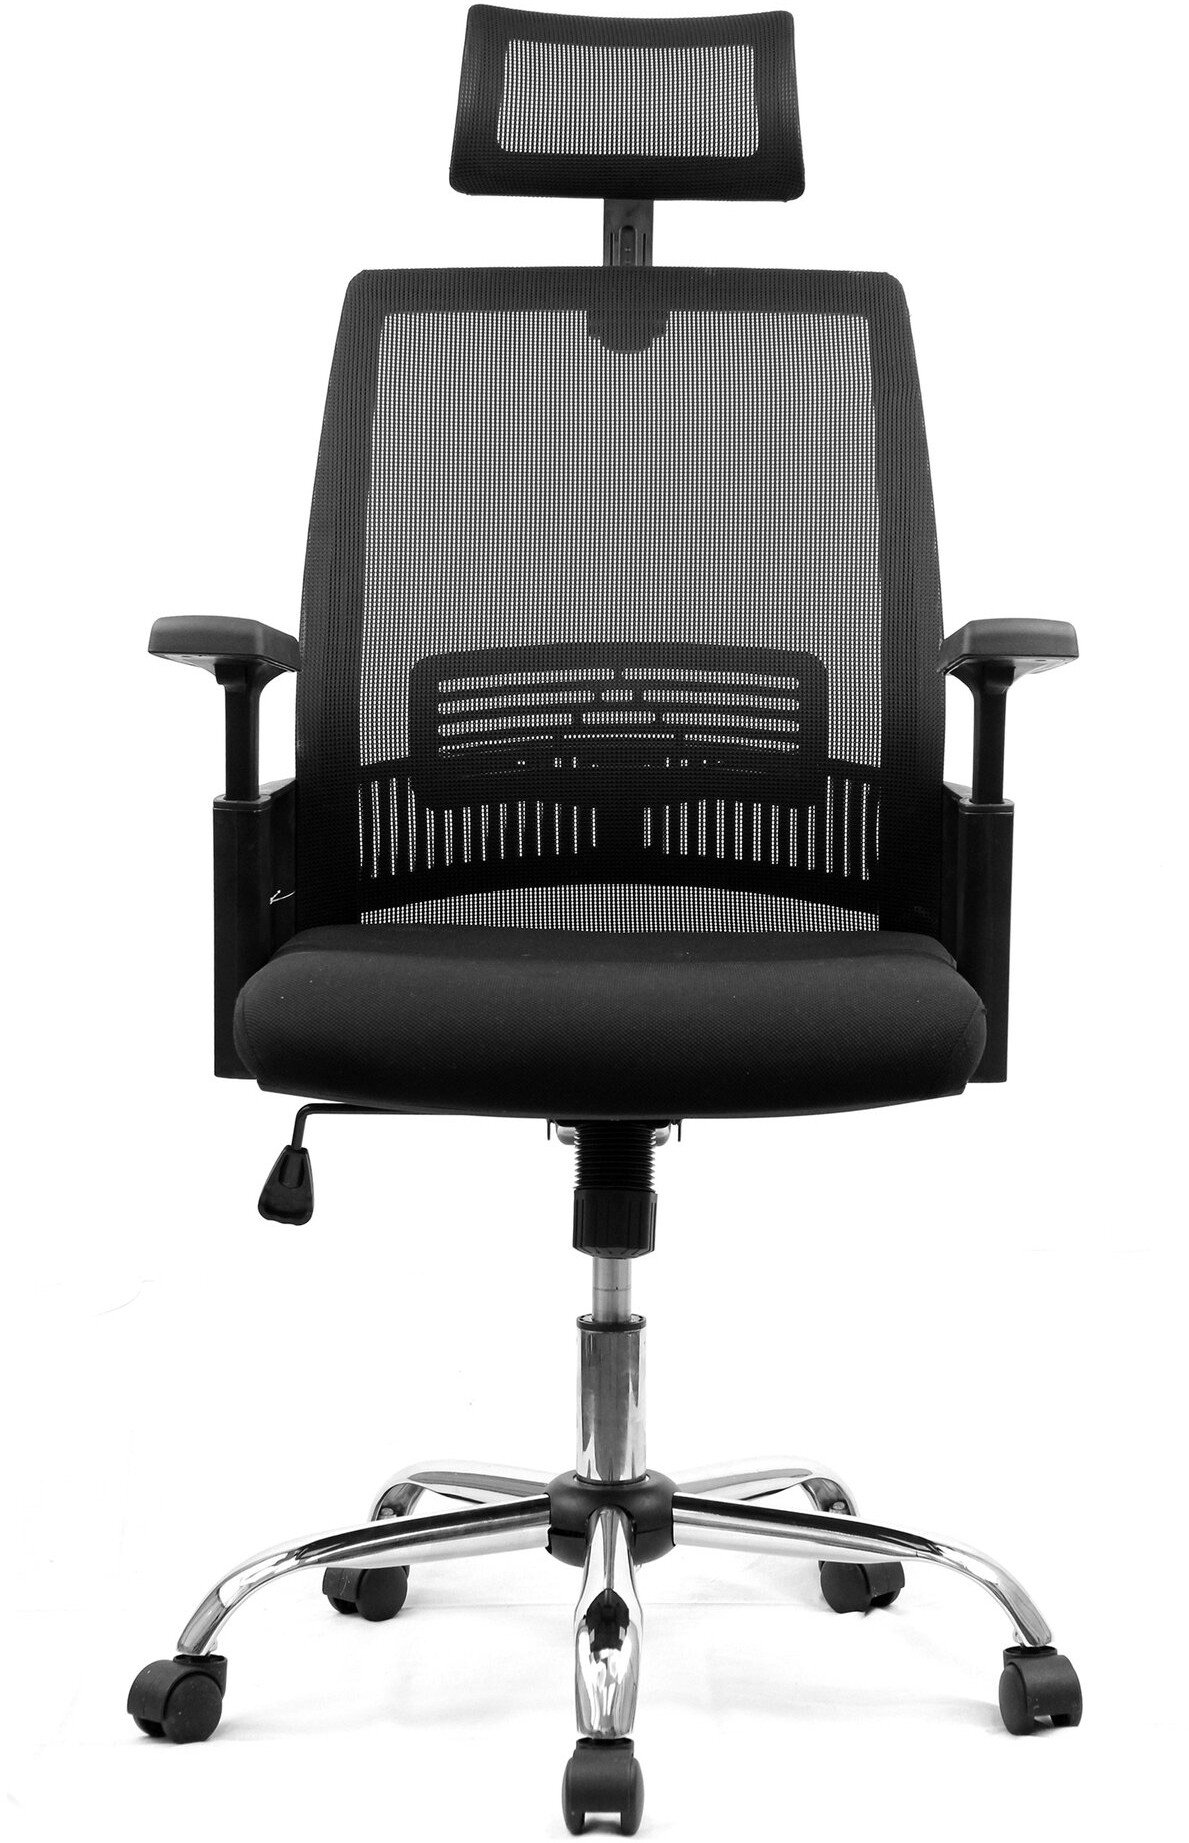 ergonomic desk chairs